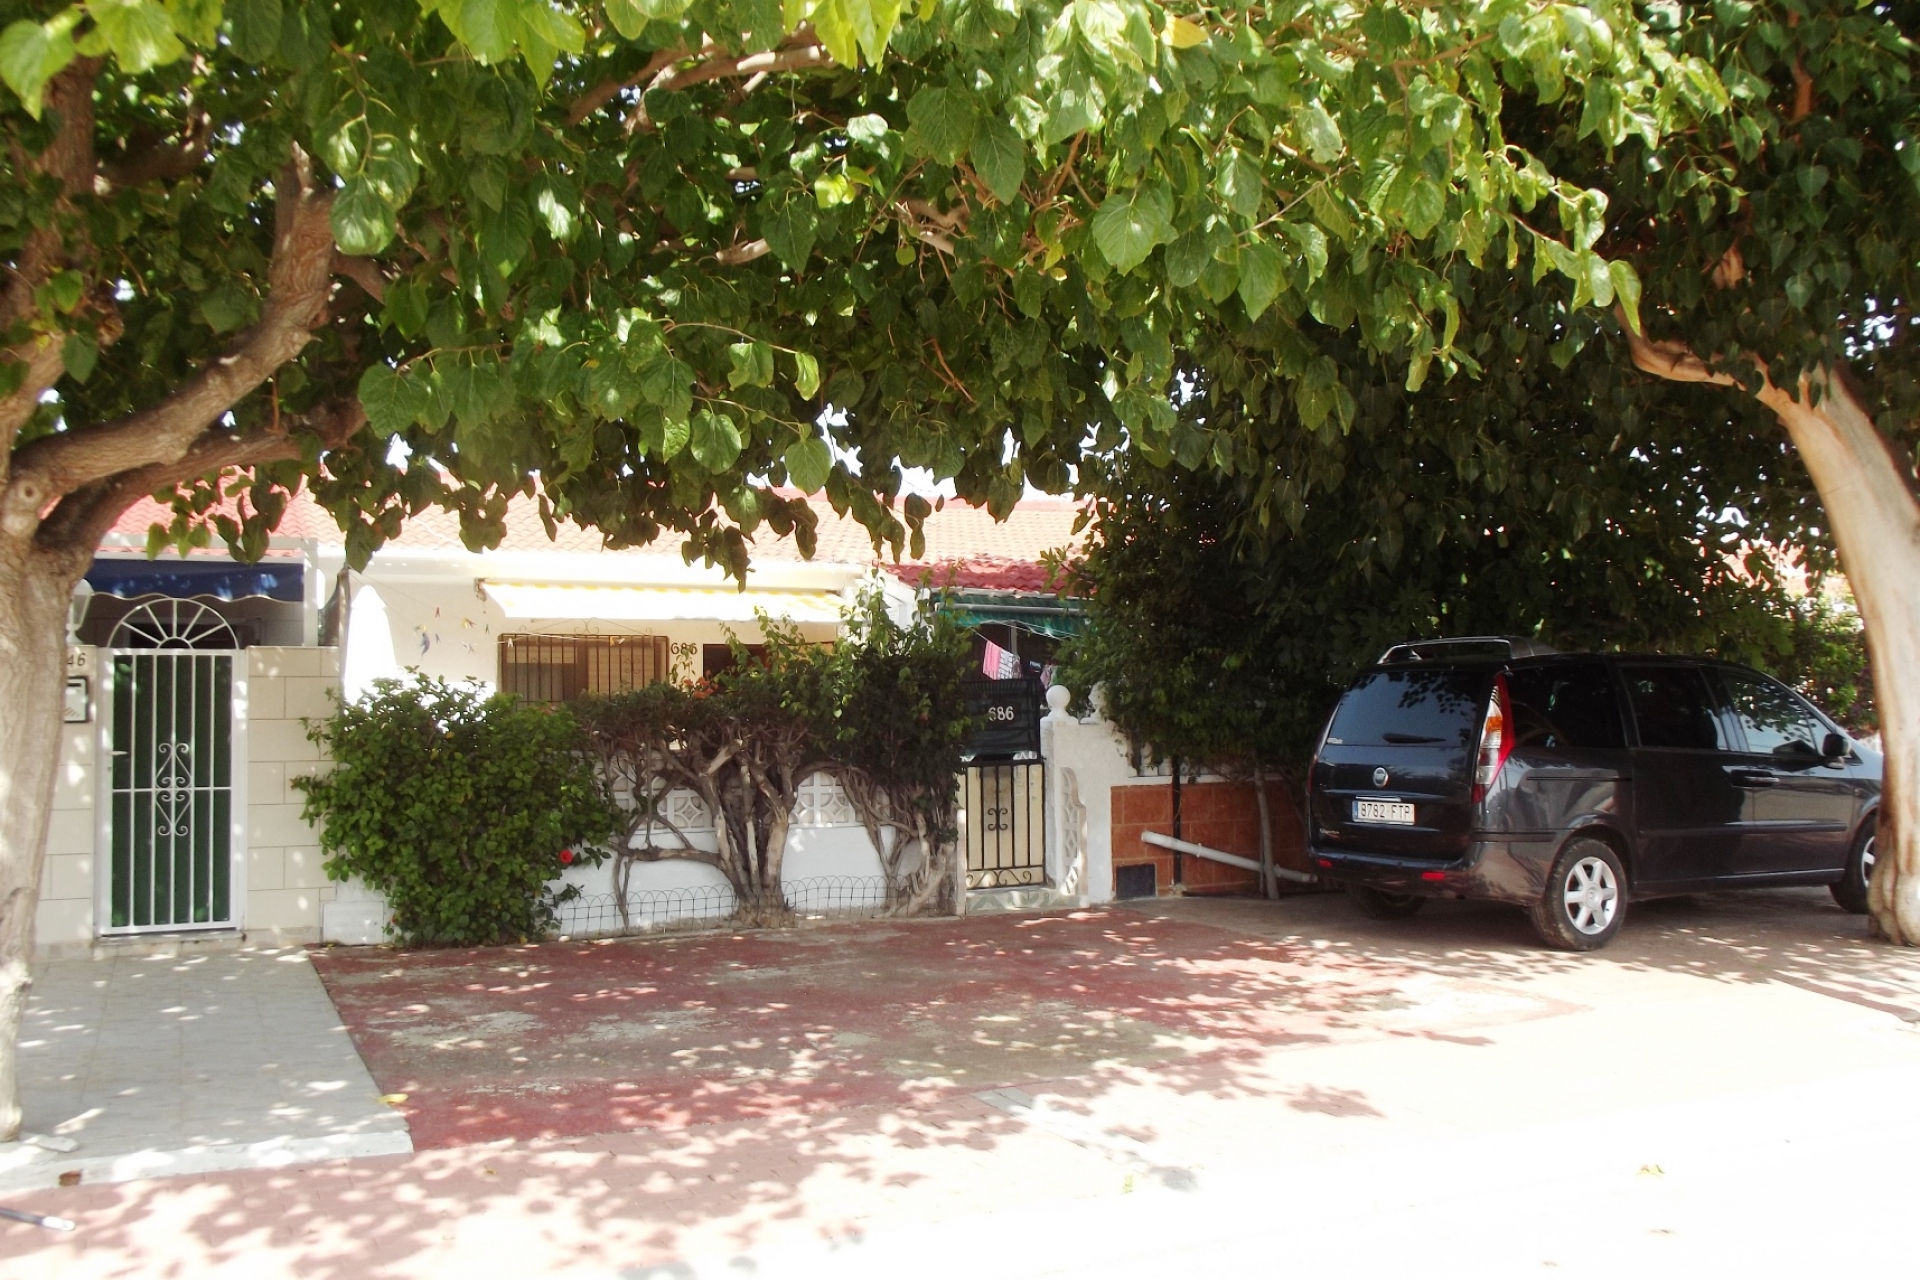 Property Sold - Bungalow for sale - Torrevieja - La Torreta